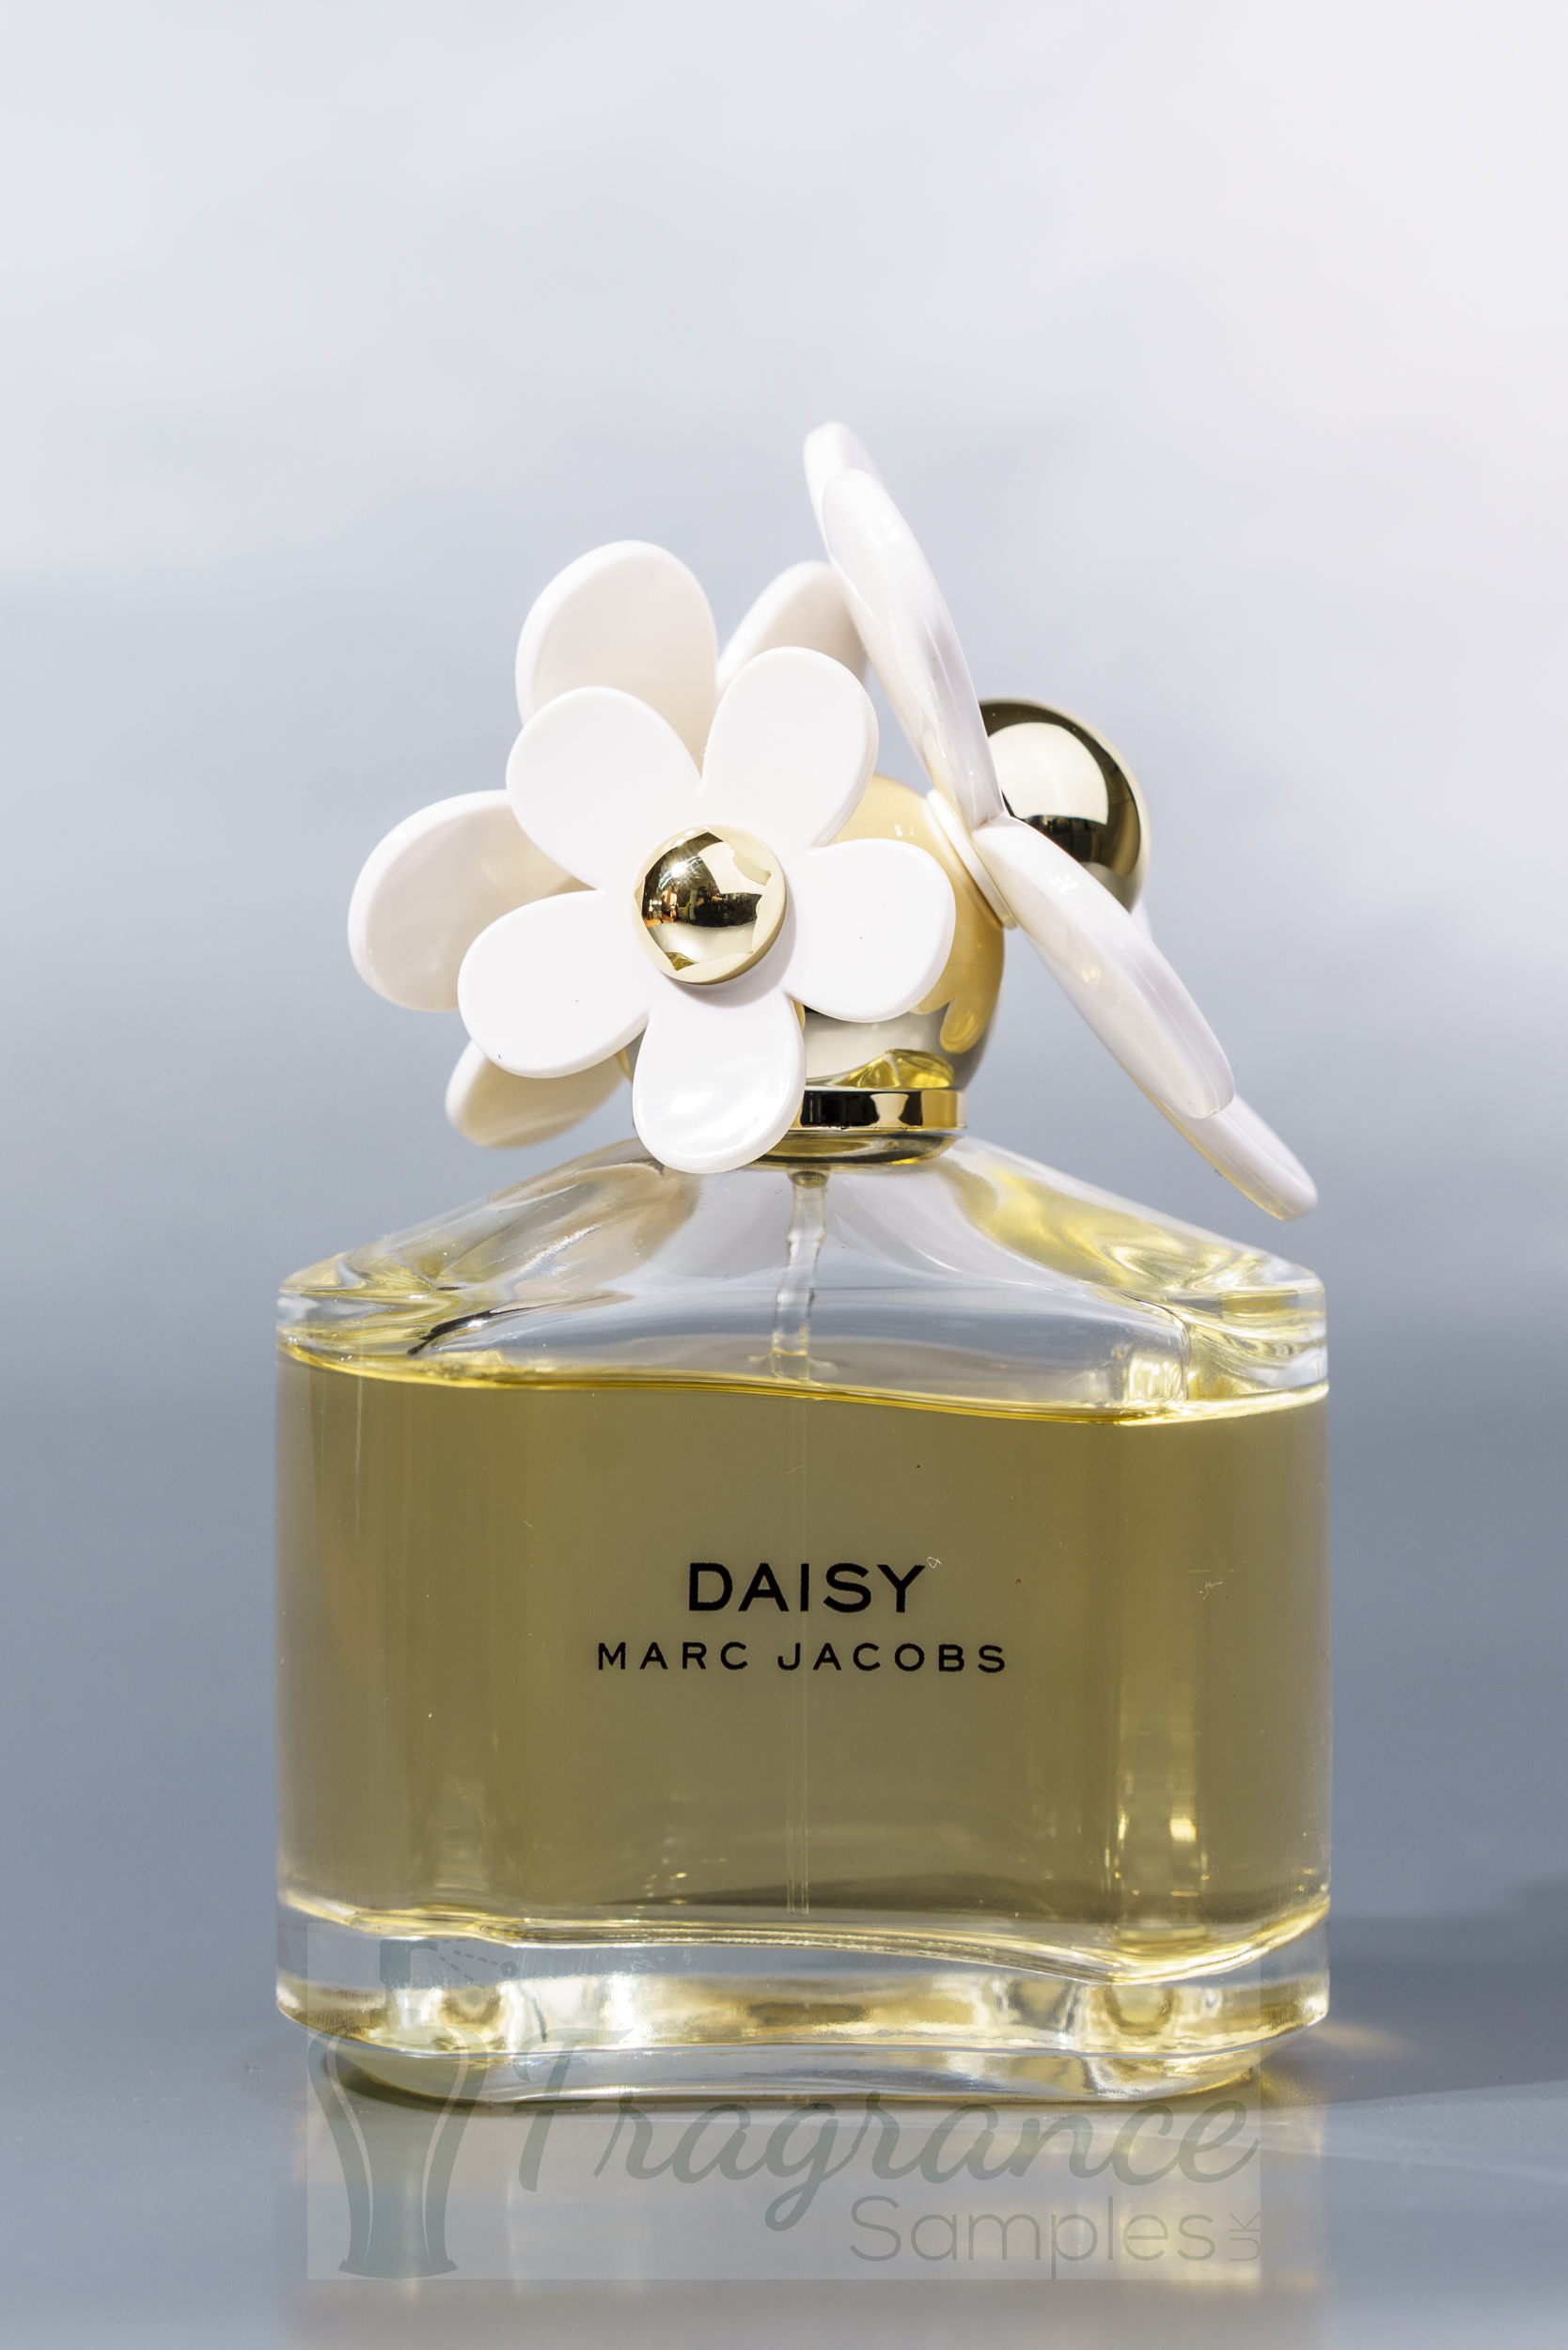 Marc Jacobs Perfume Samples